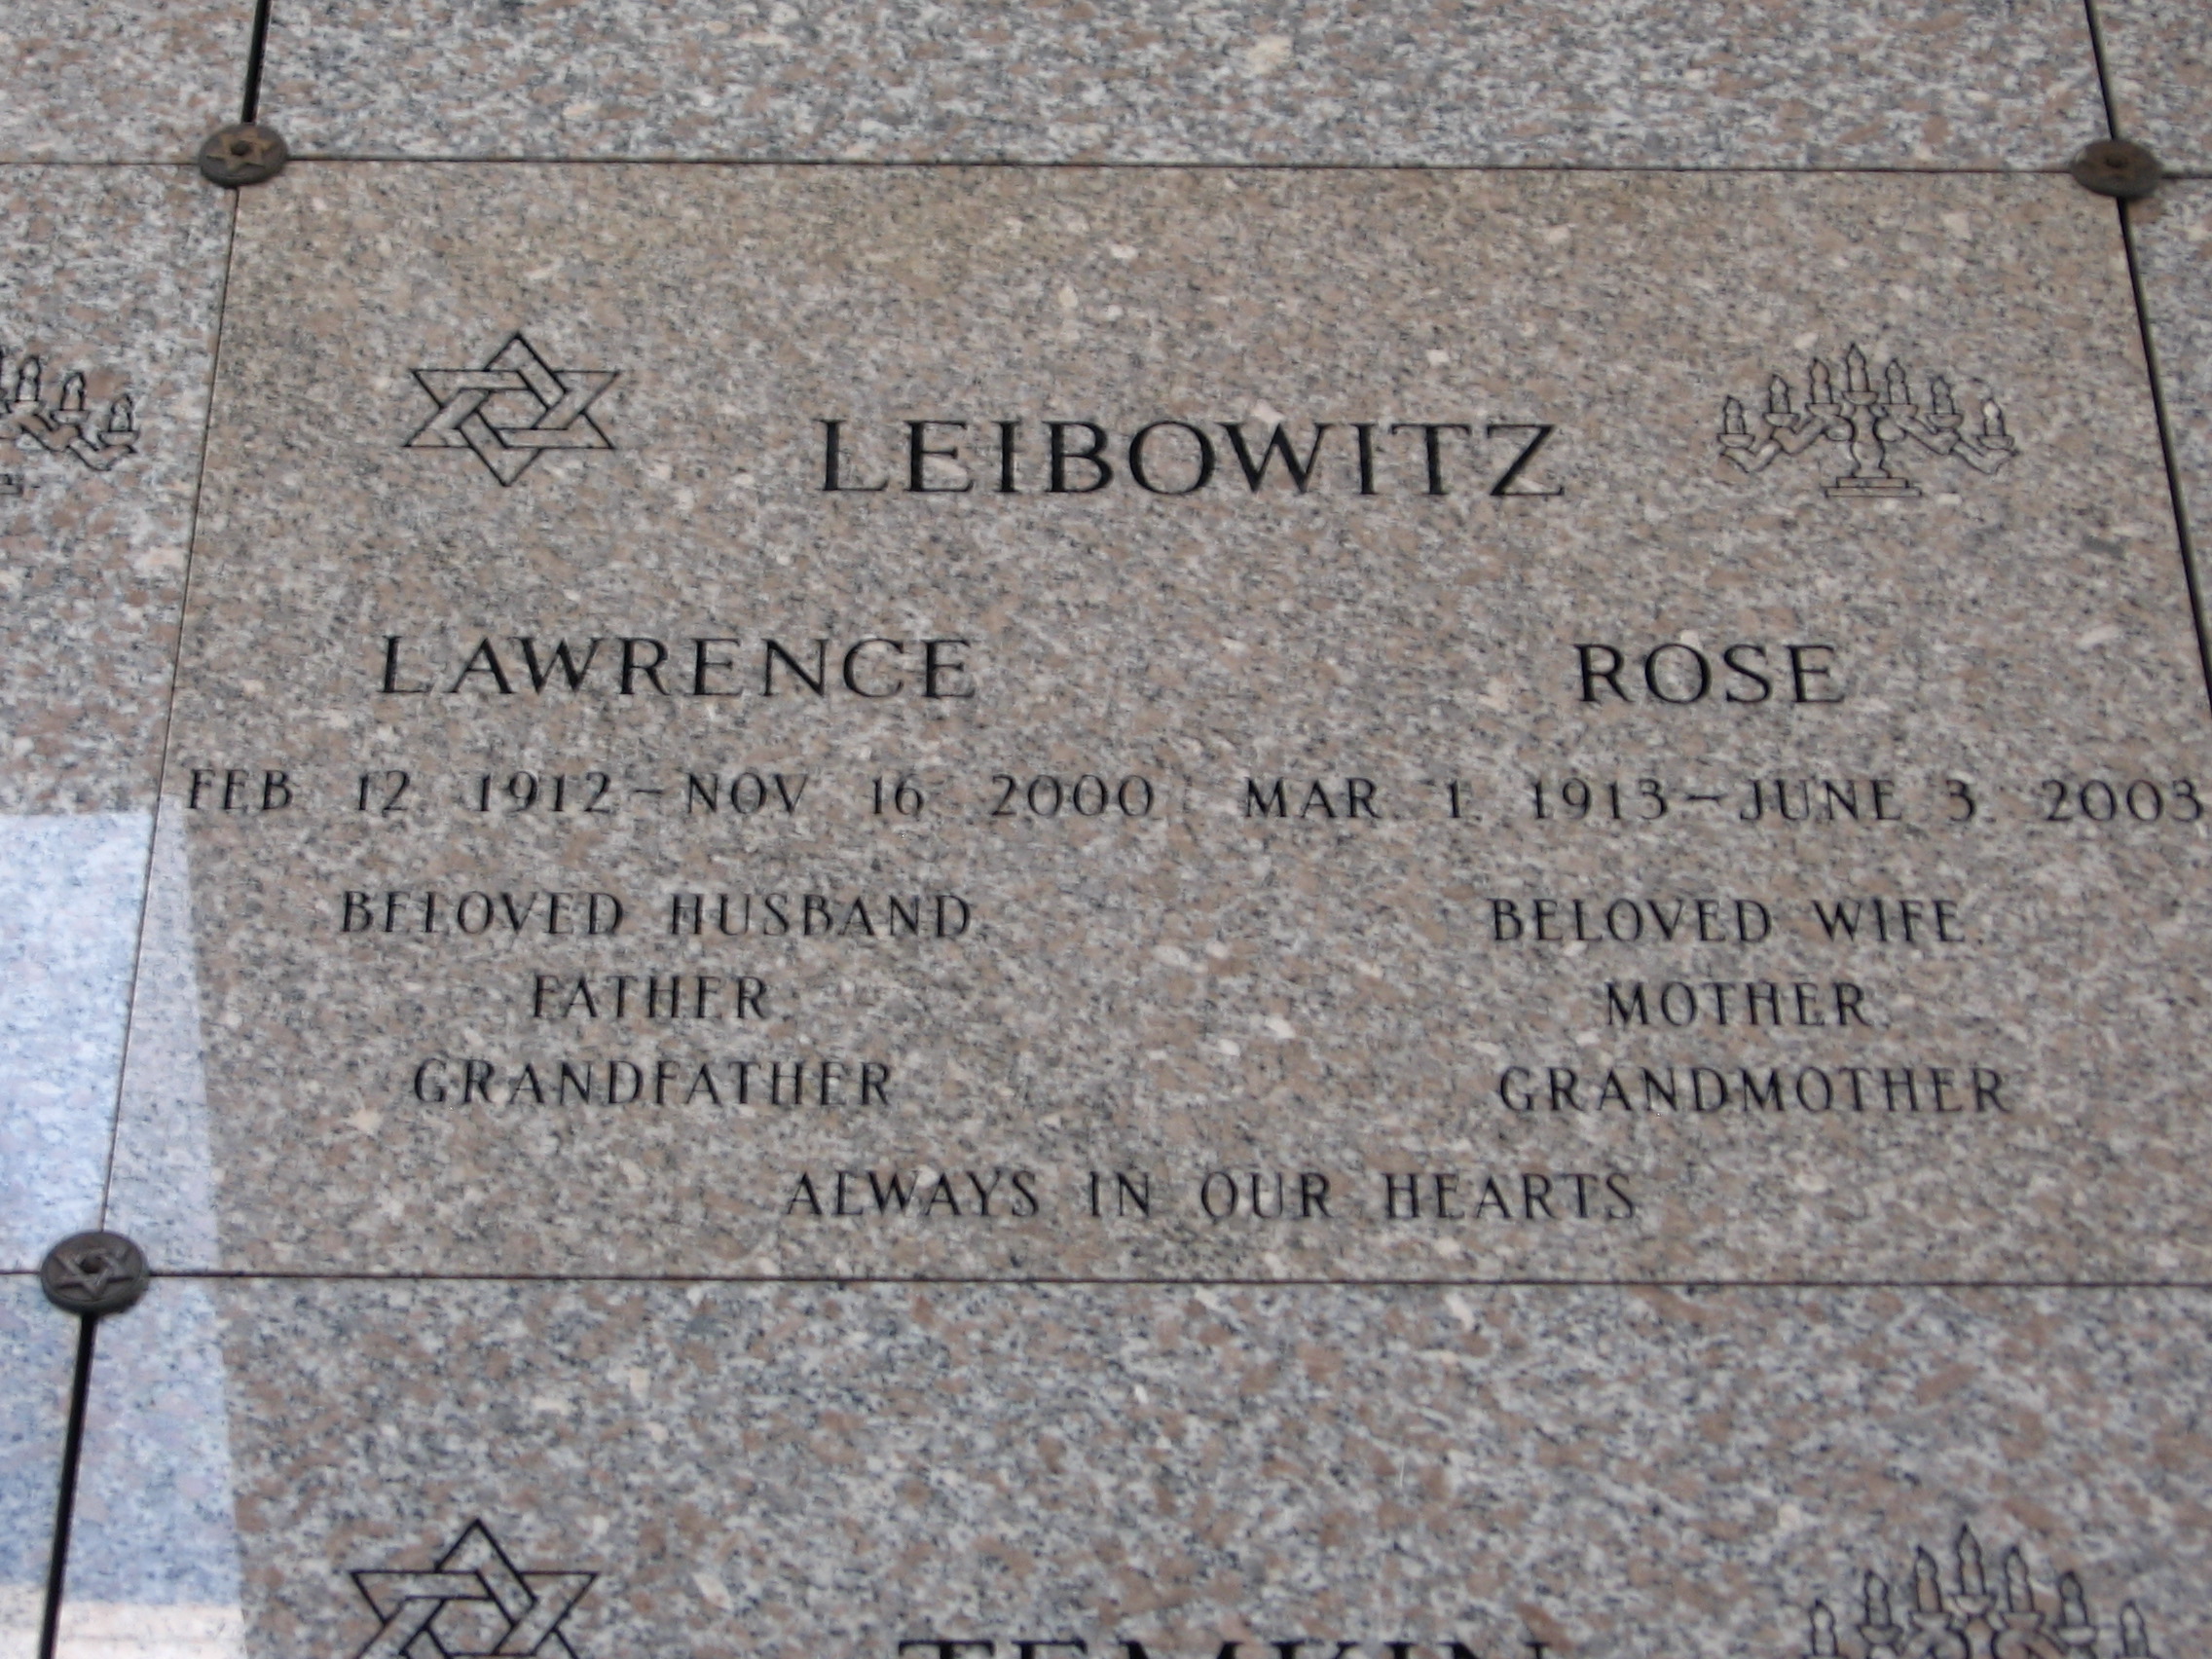 Rose Leibowitz